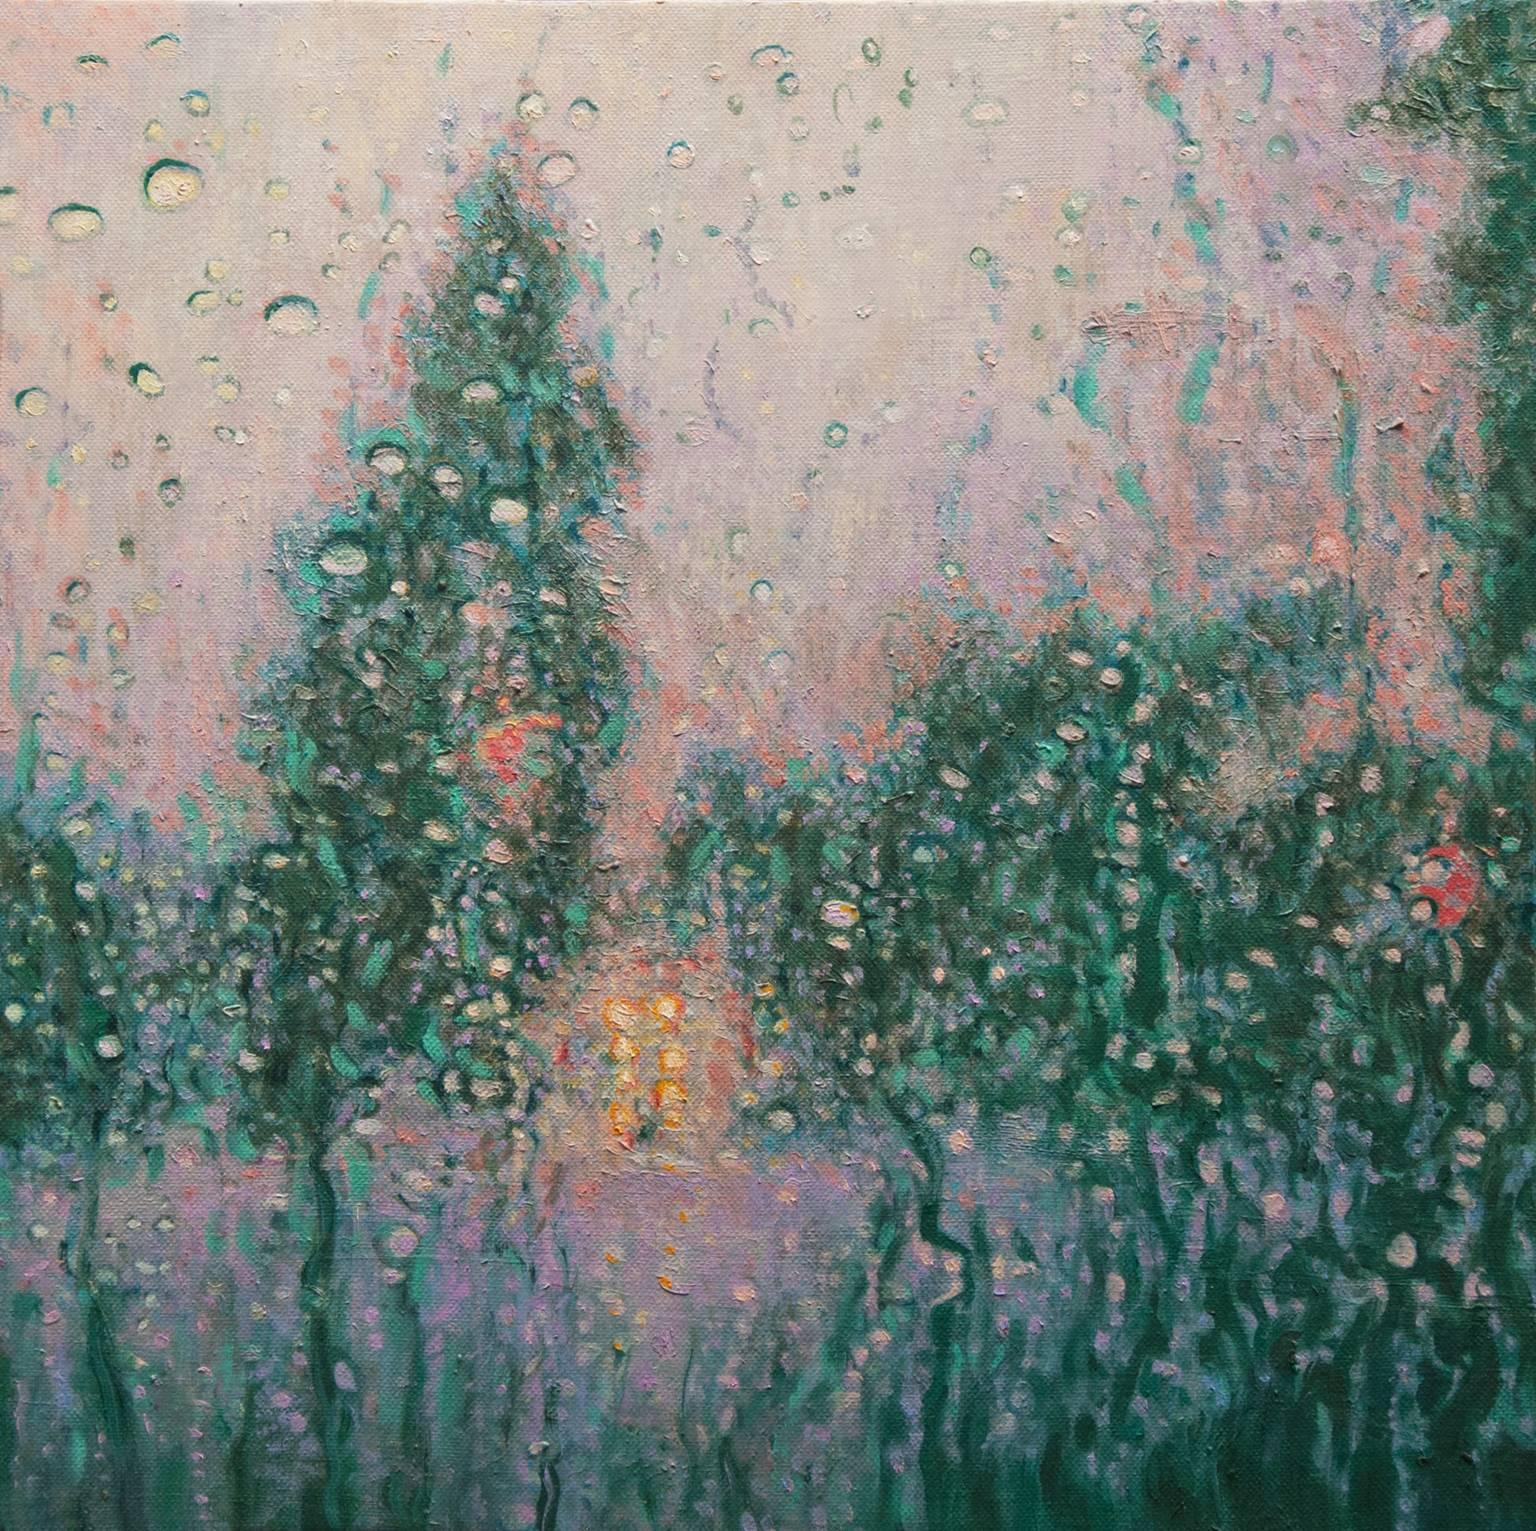 Confetti Rain 2. landscape impressionist  - Painting by Katherine Kean